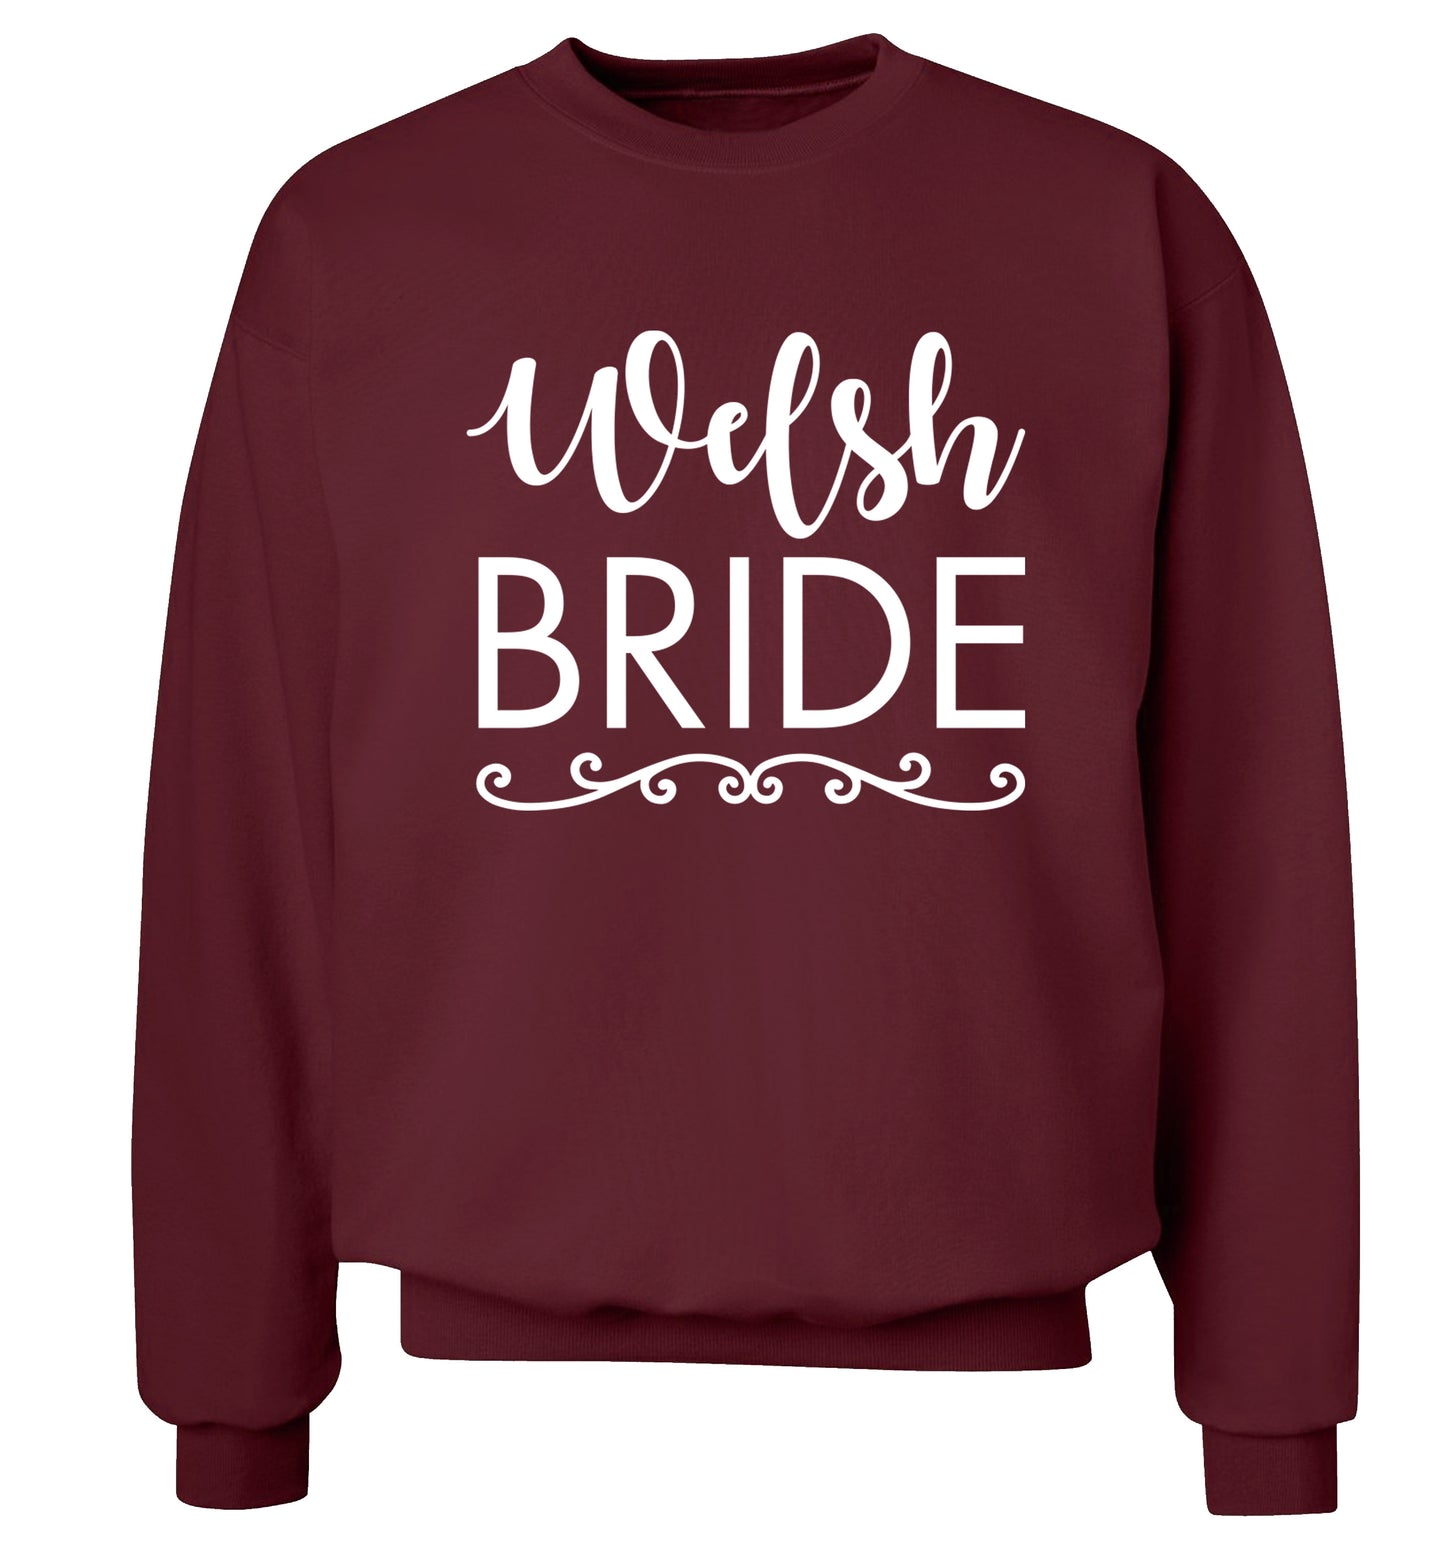 Welsh Bride Adult's unisex maroon Sweater 2XL